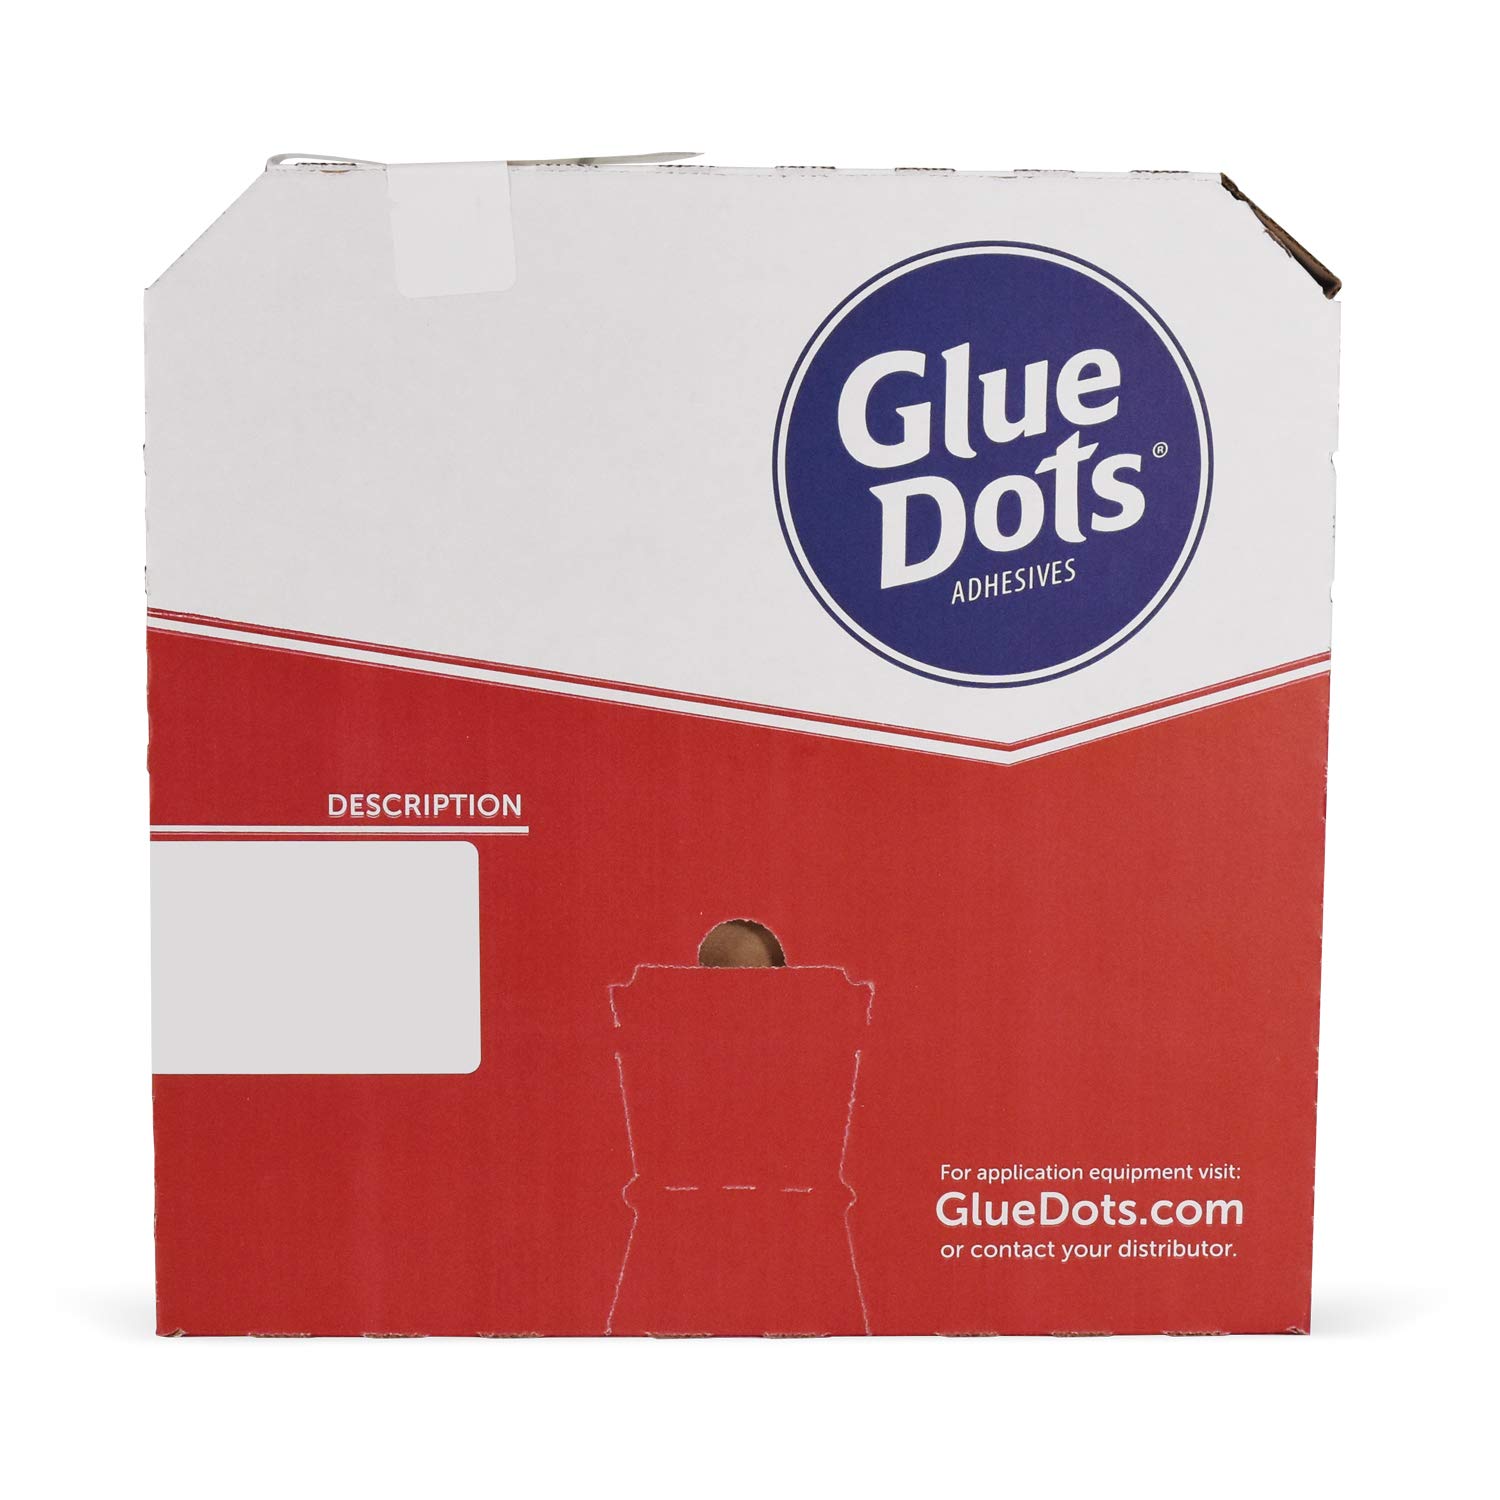 Glue Dots box product